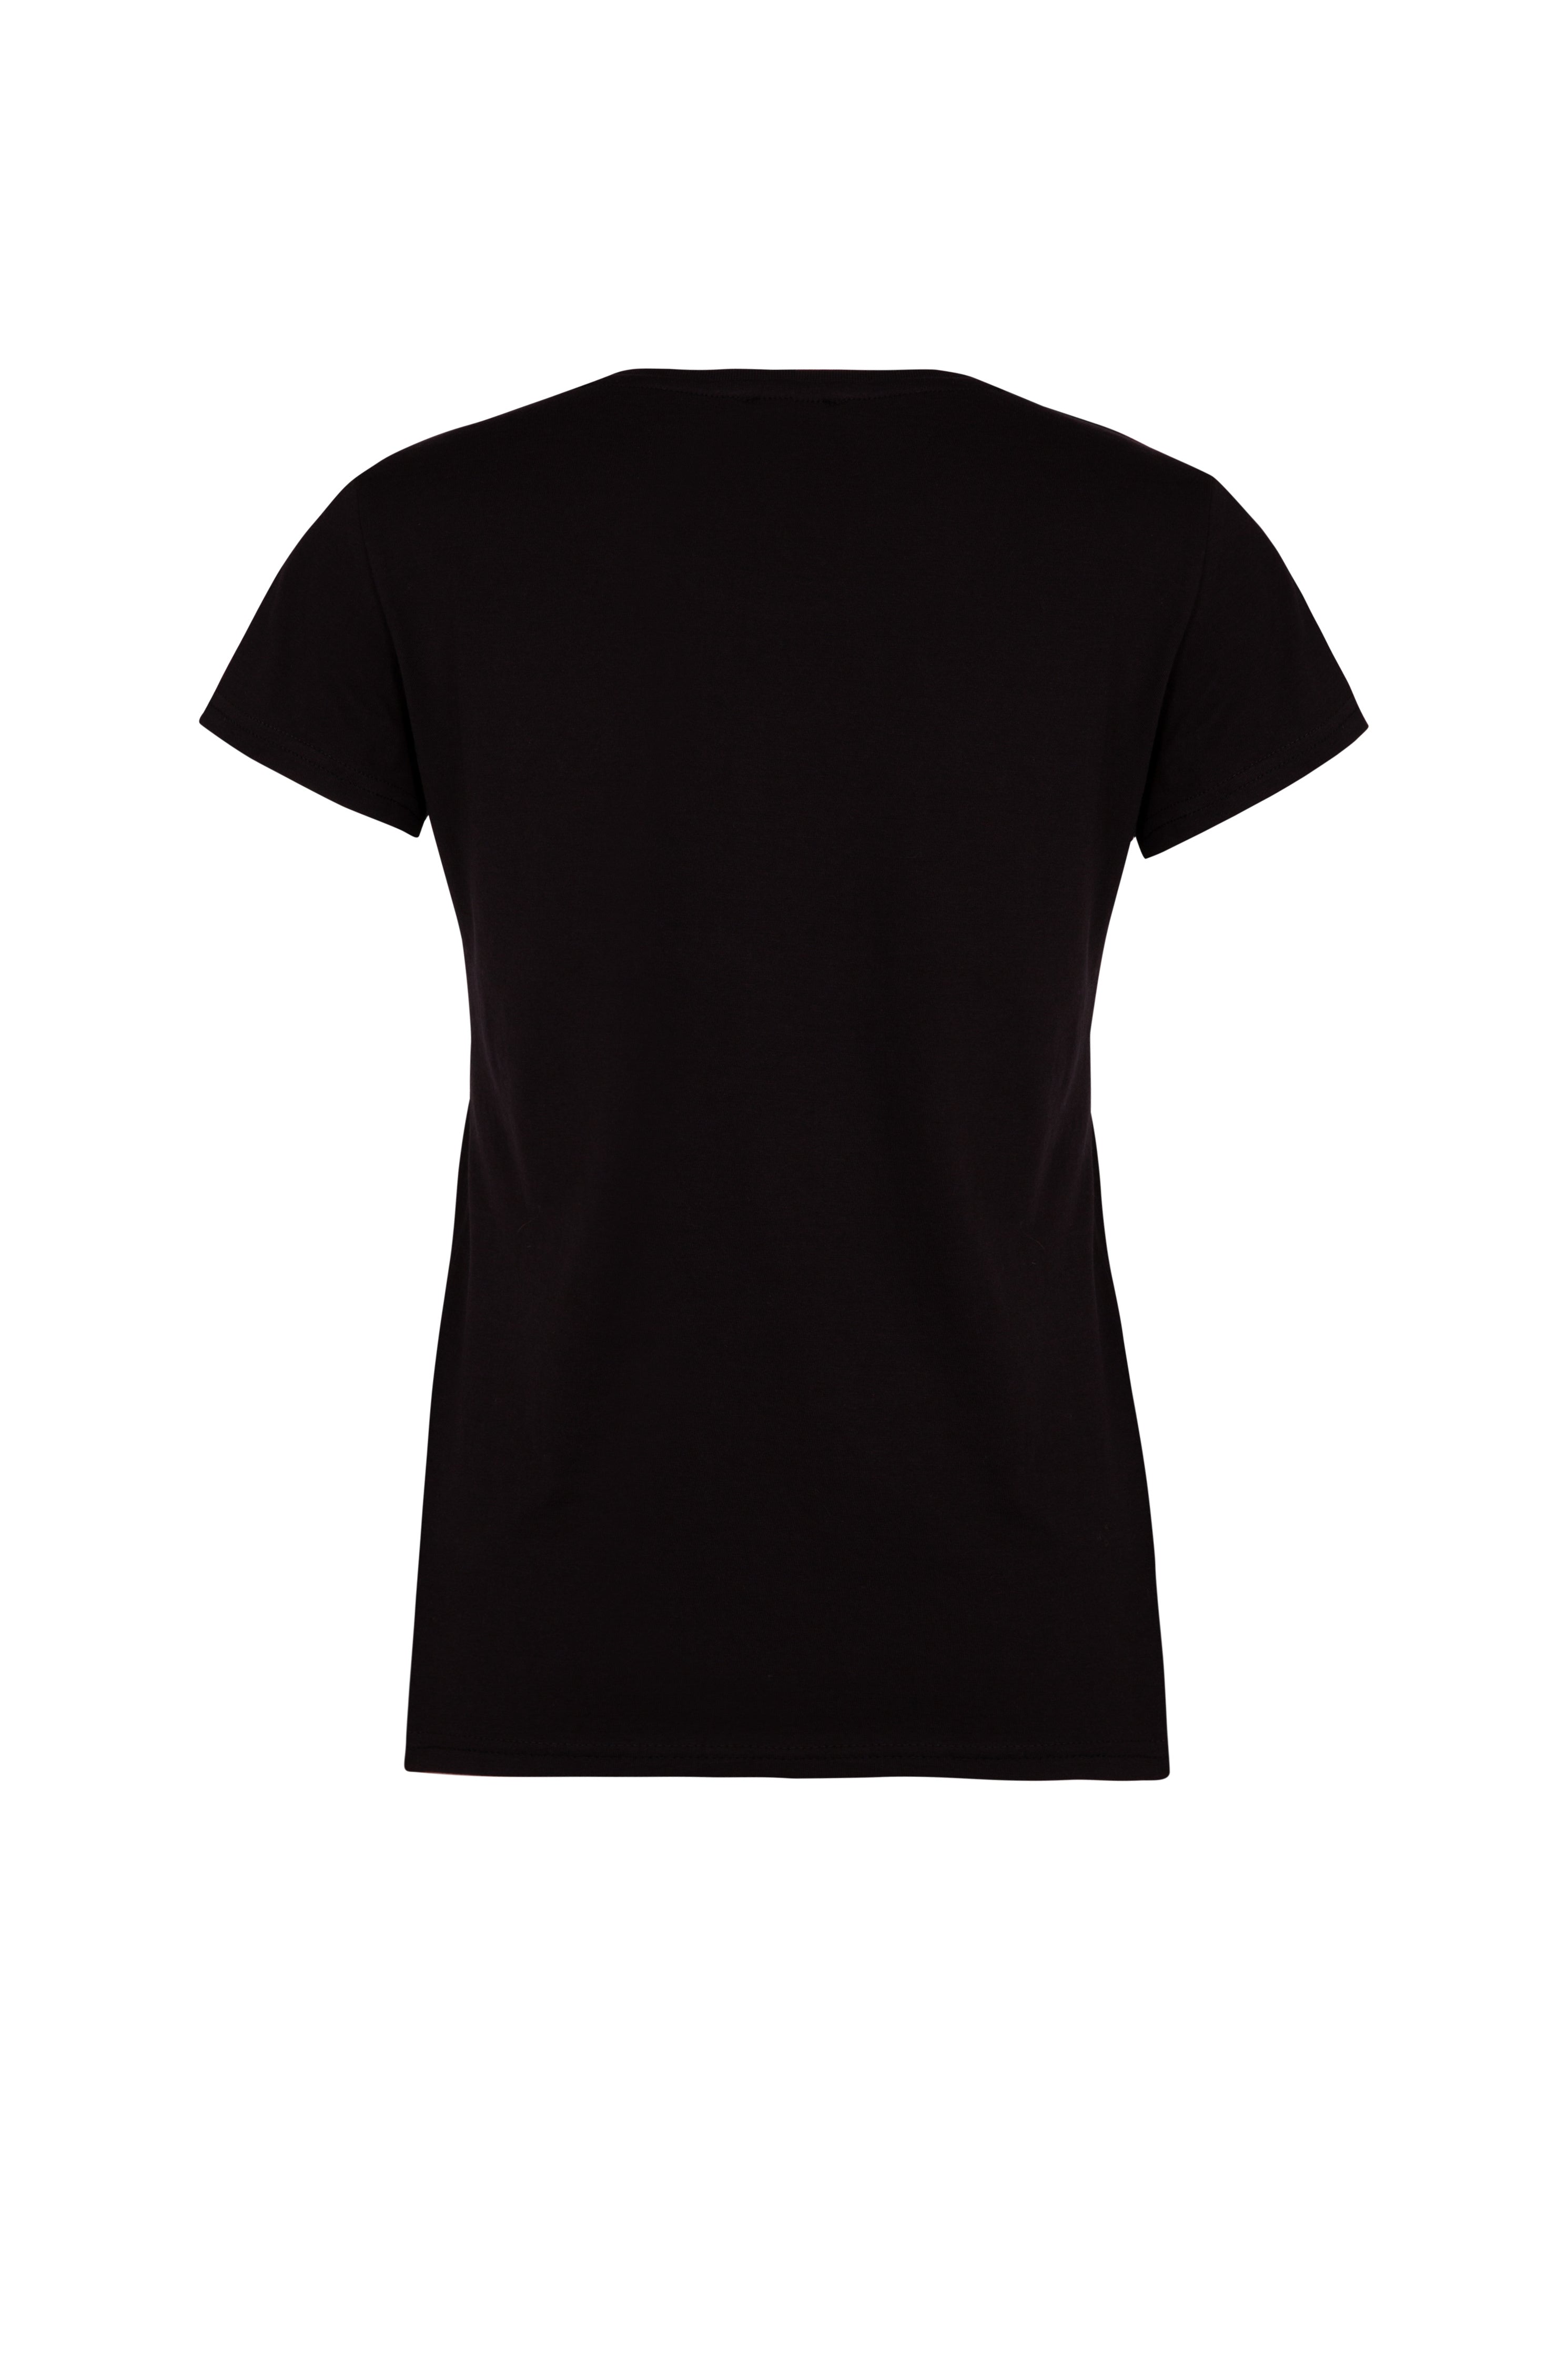 Back of black organic cotton basic fit women's t-shirt